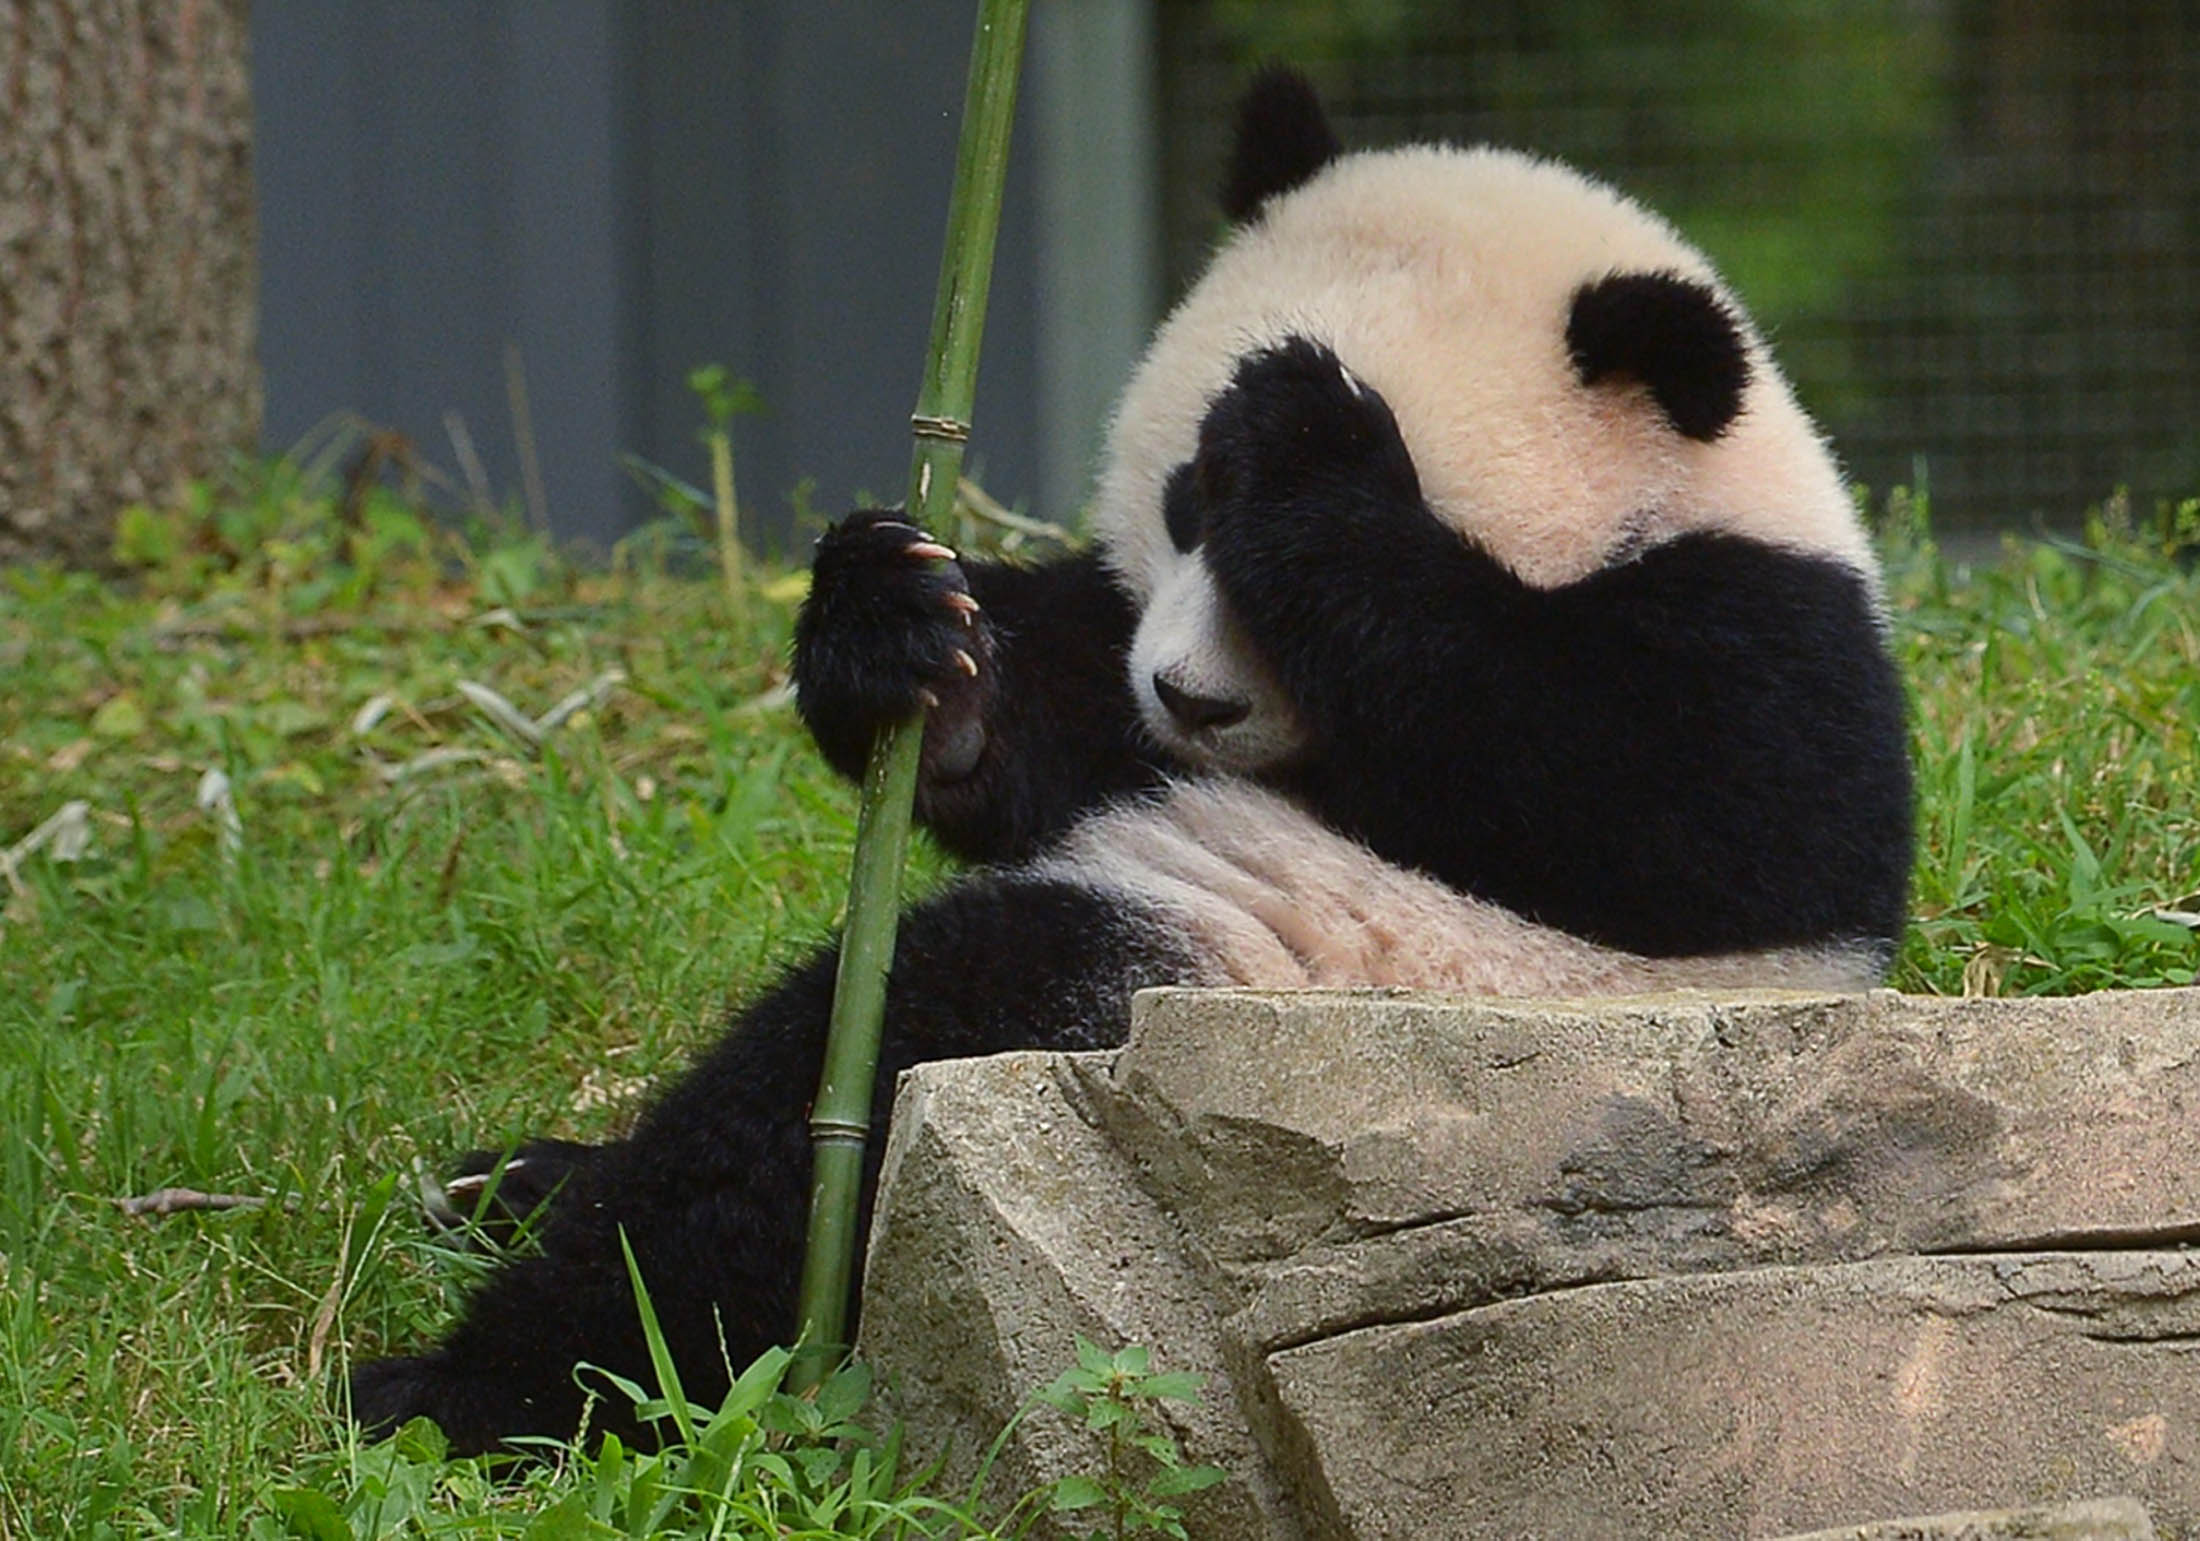 Bei Bei, the Giant Panda, will be taken from Washington DC via FedEx